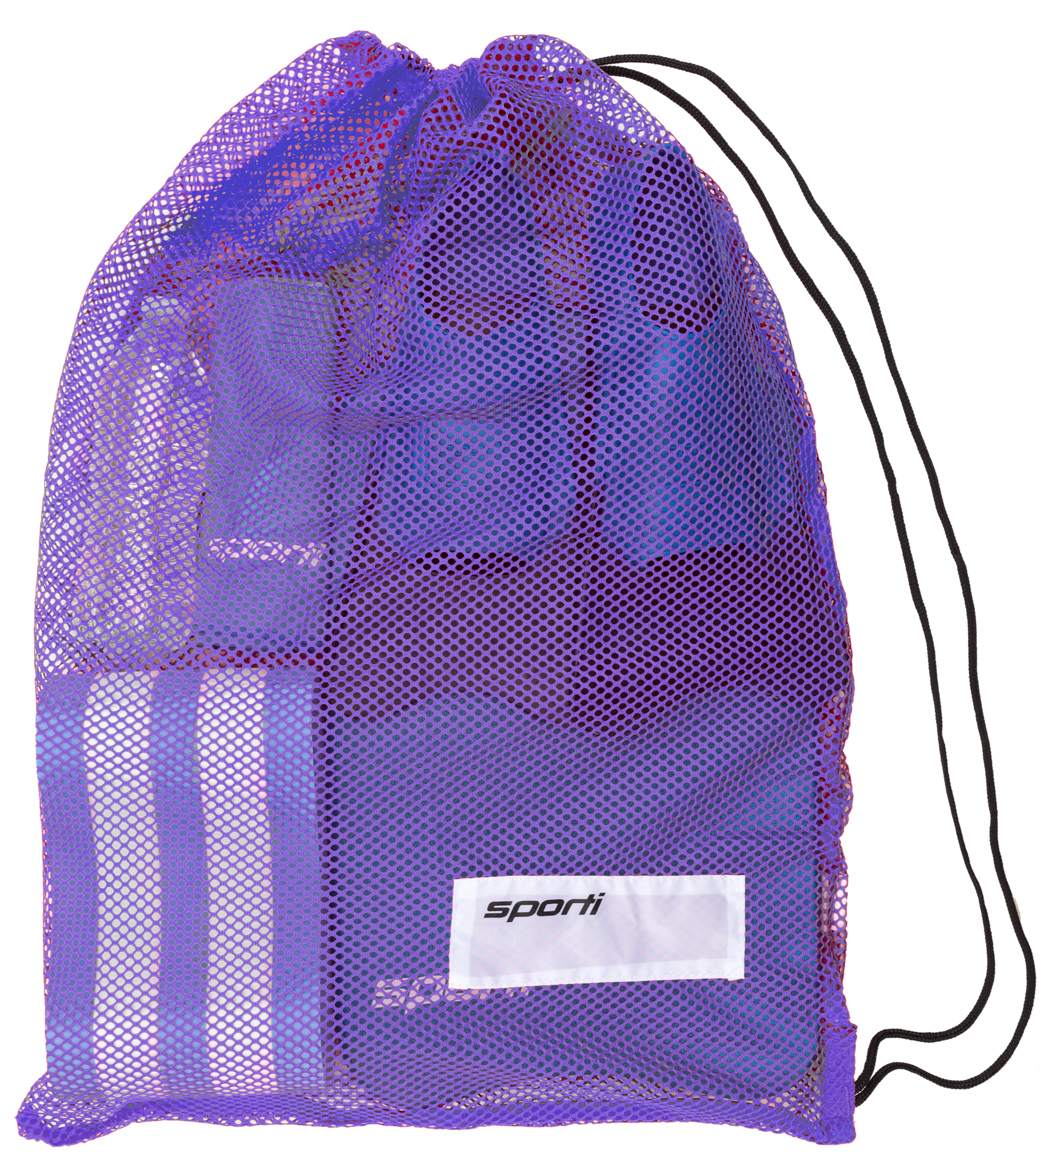 Sporti Mesh Bag - Purple Polyester - Swimoutlet.com